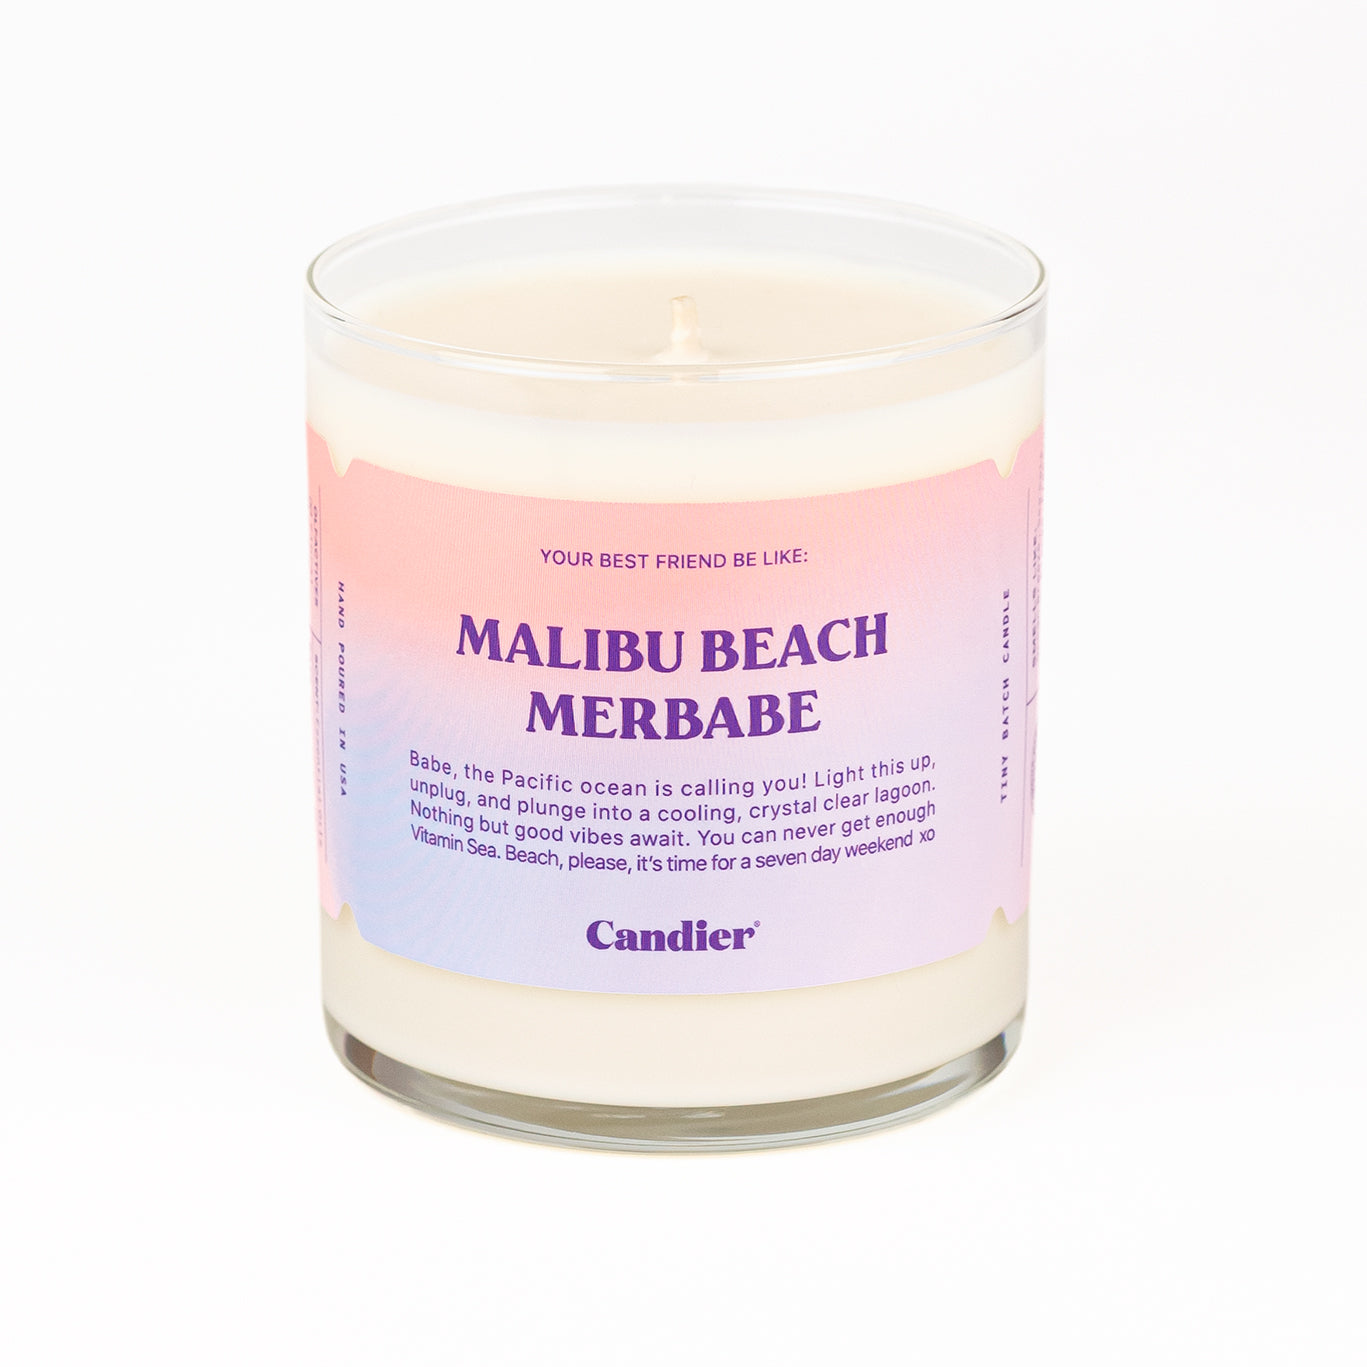 Malibu Beach Merbabe